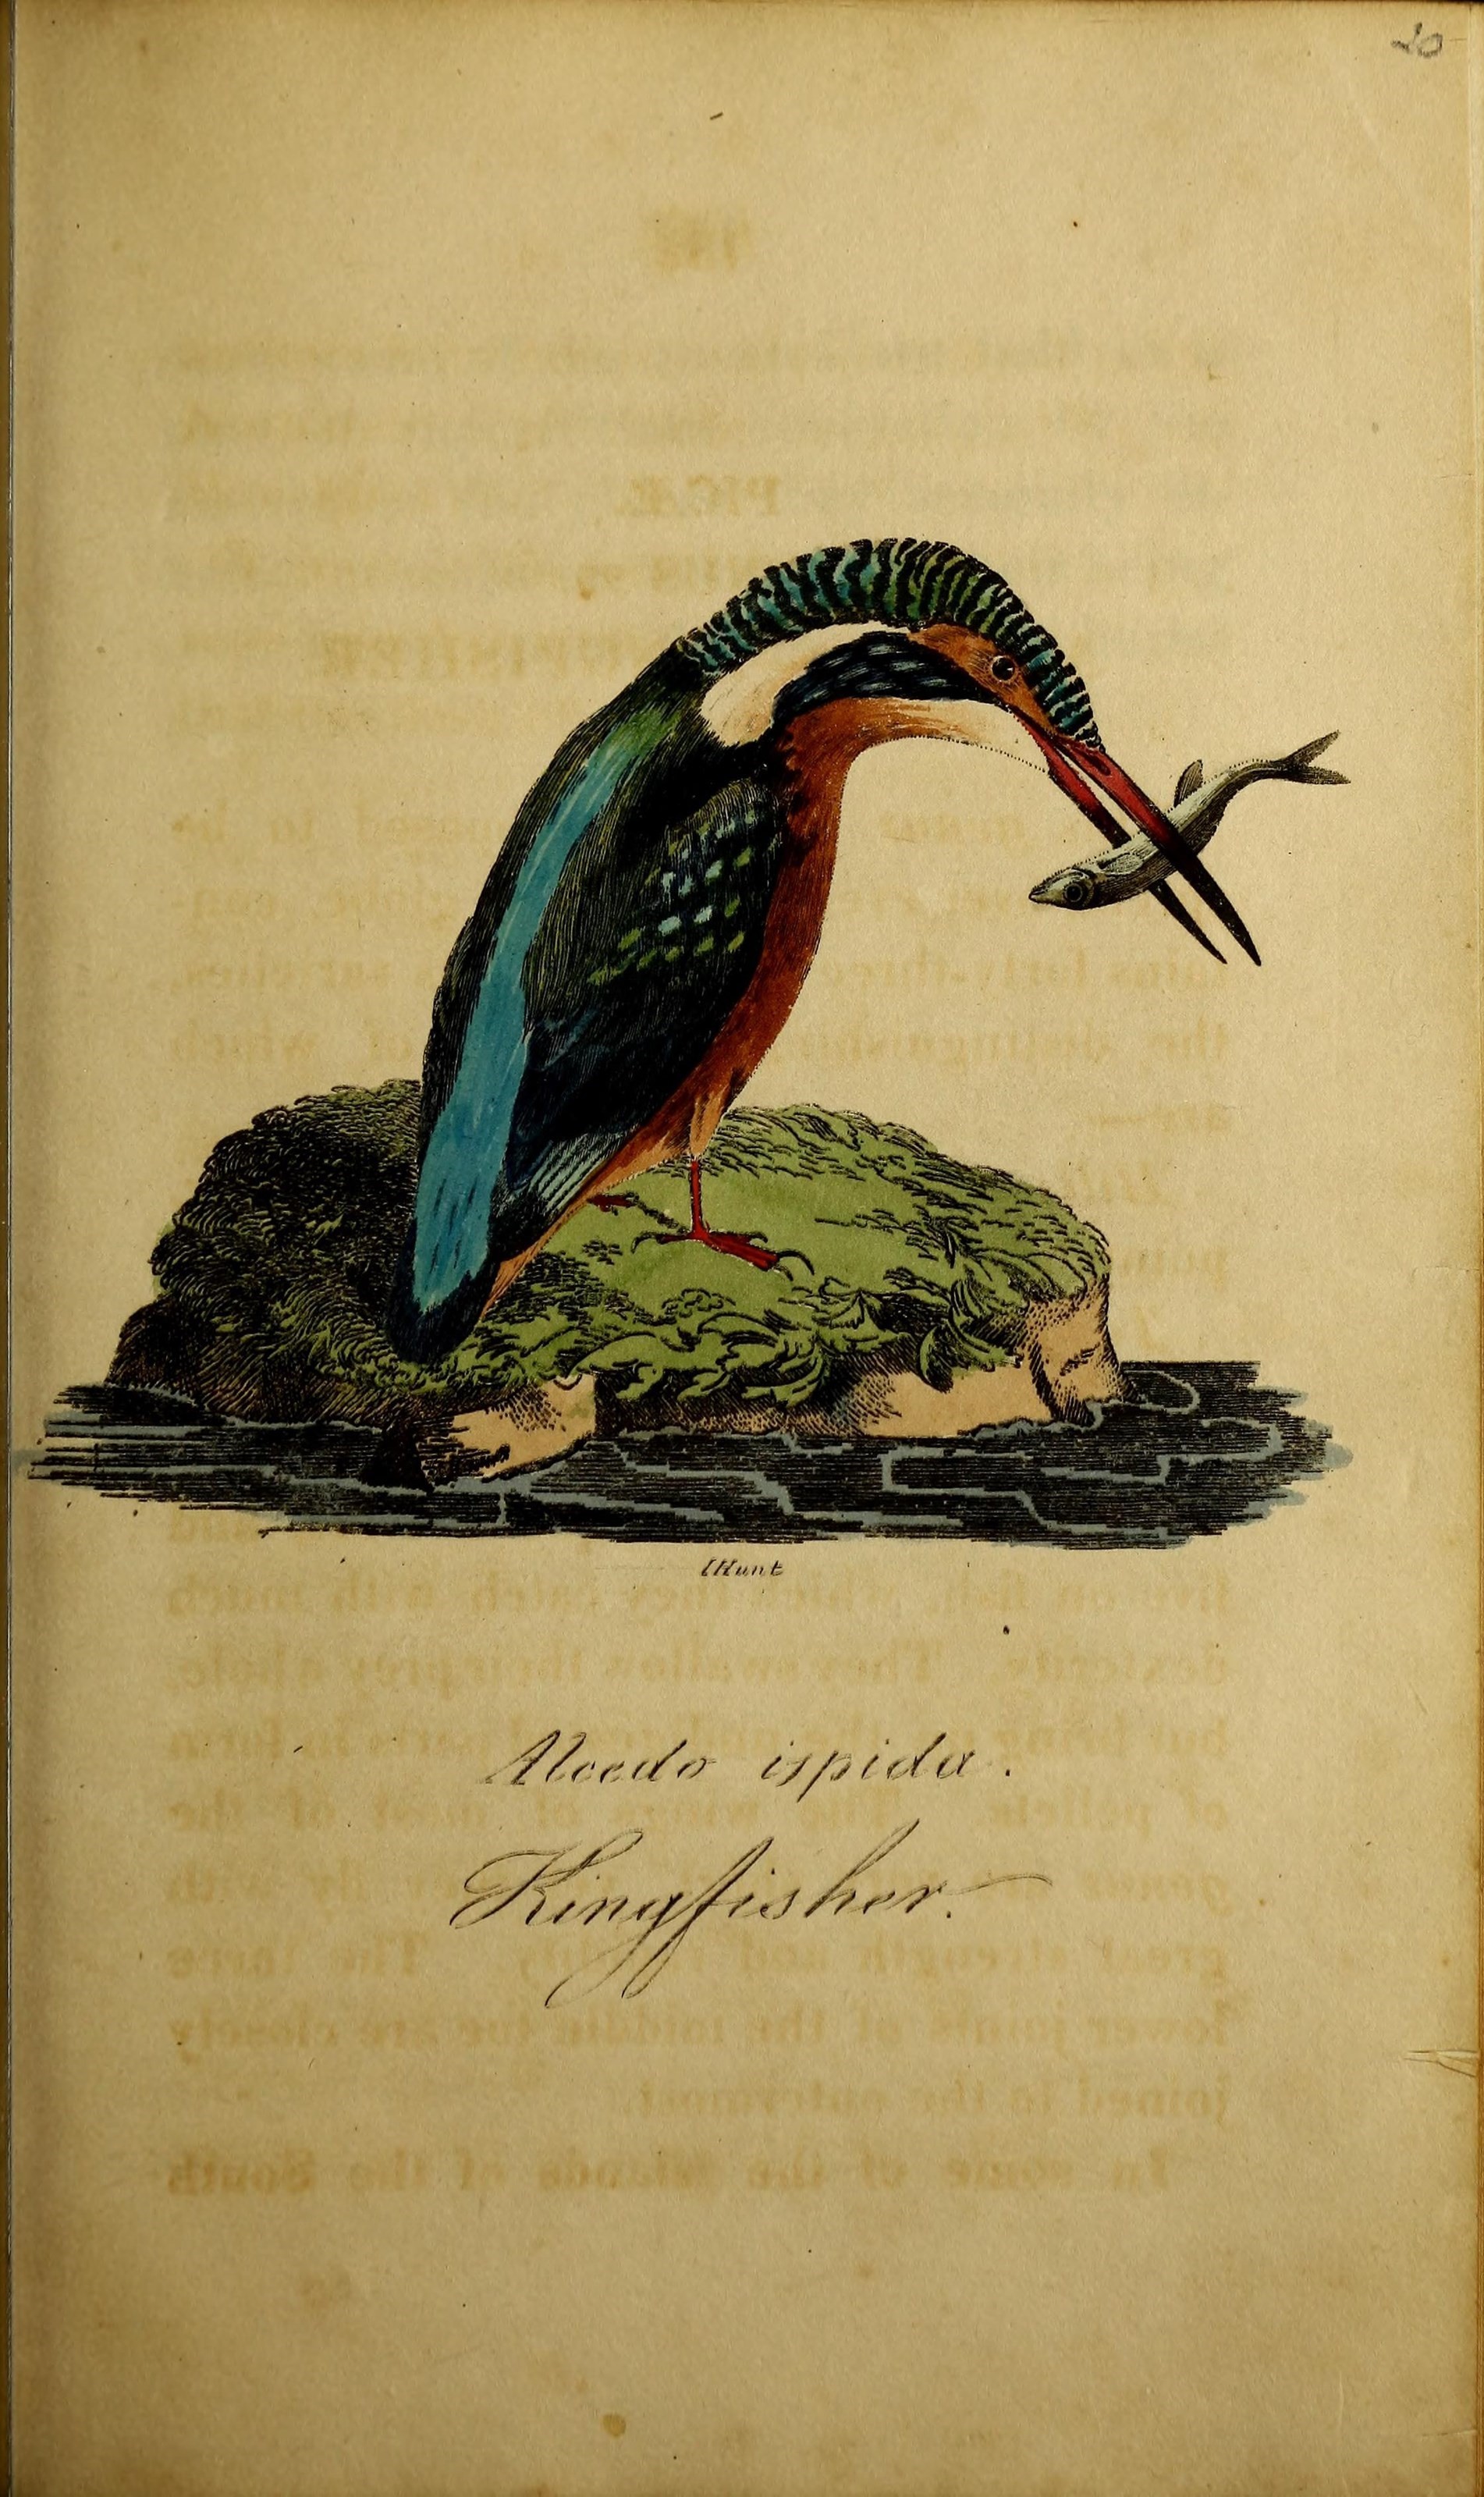 Image of Alcedo Linnaeus 1758